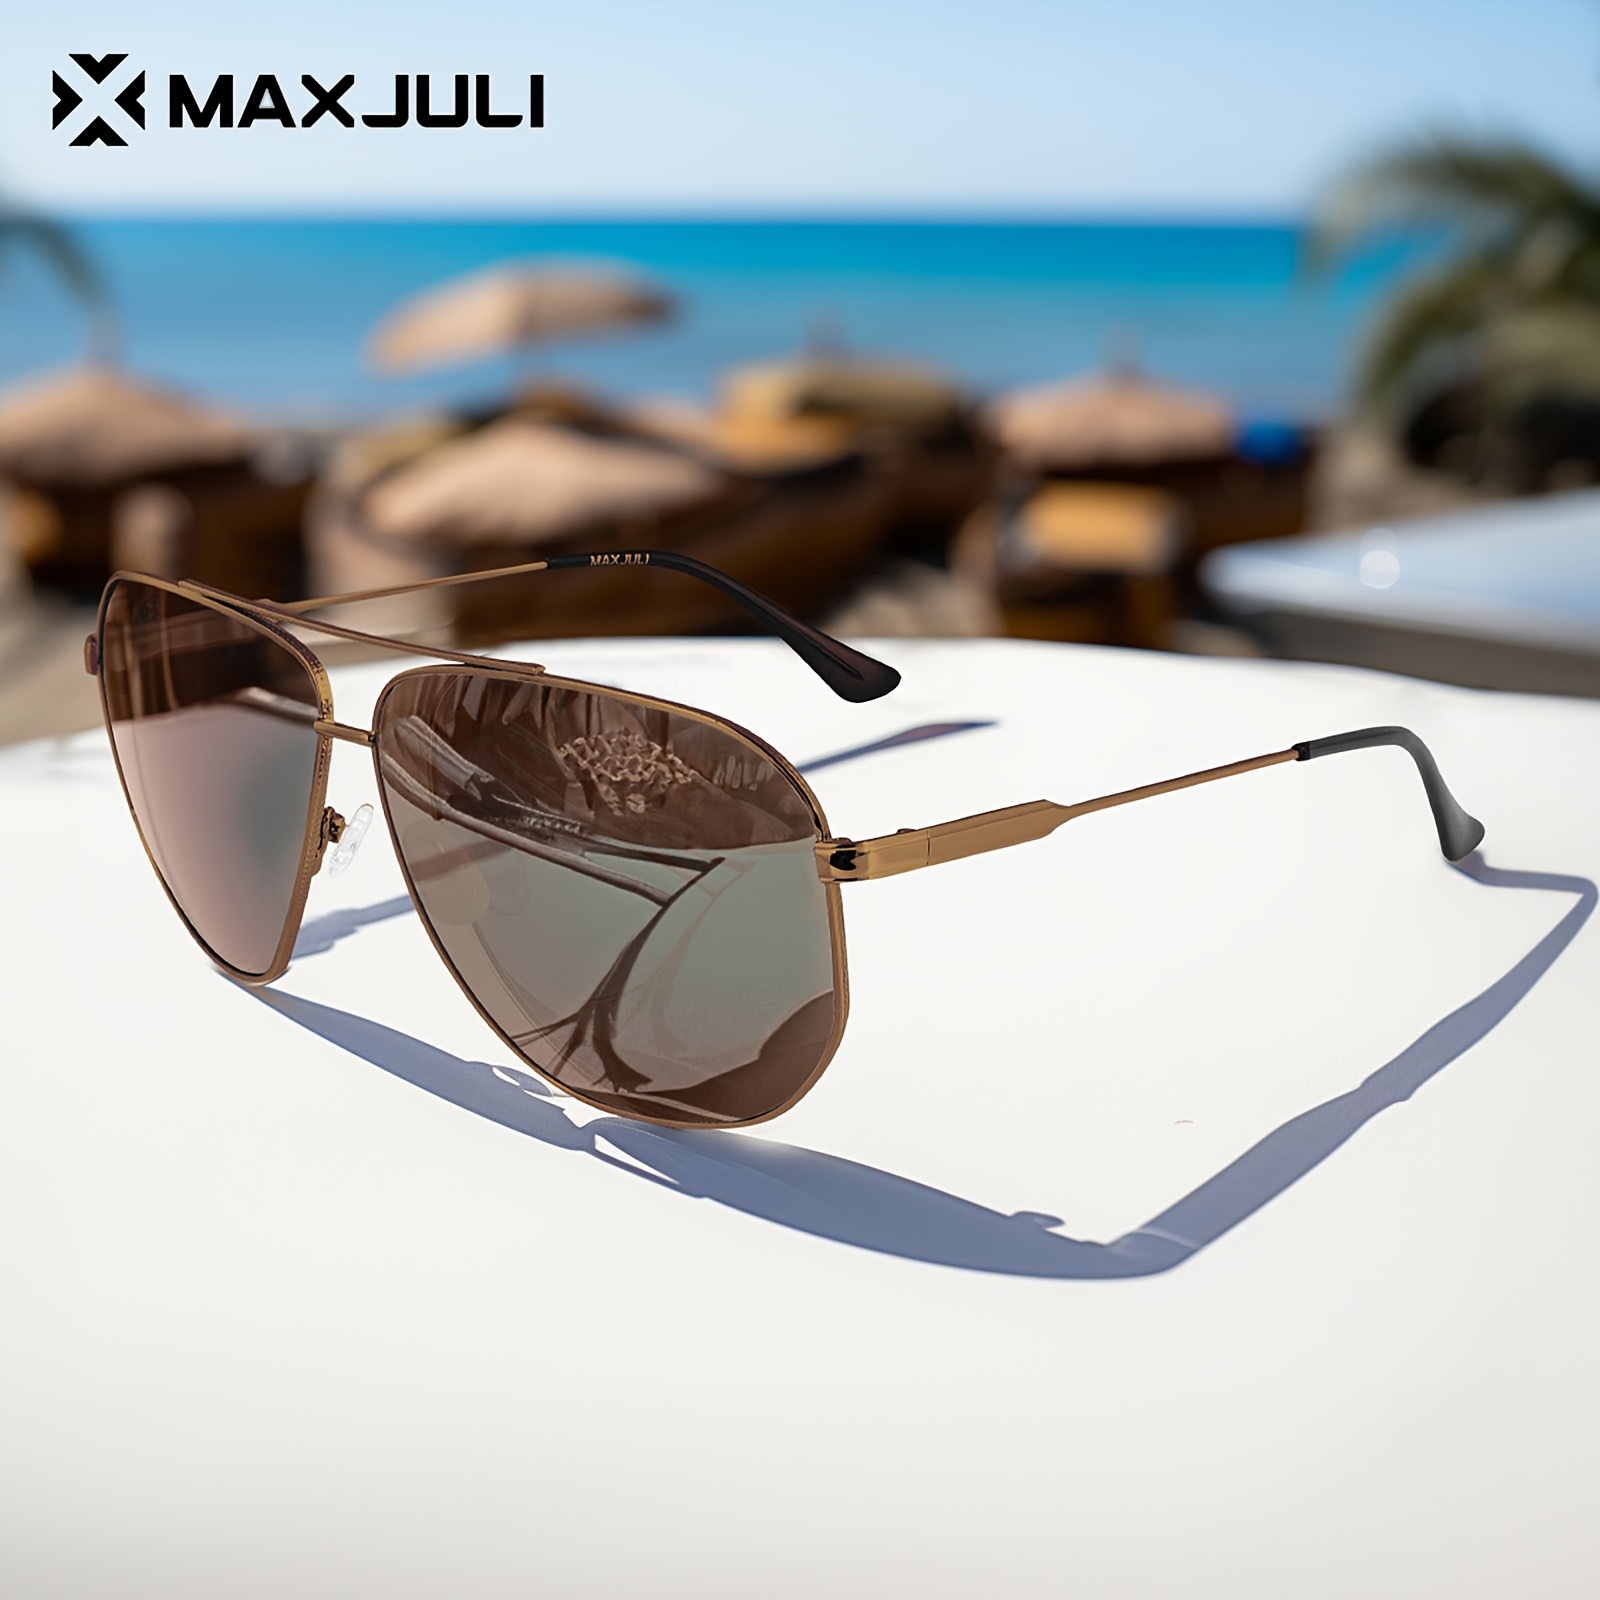 MAXJULI XXL Size Extra Large Polarized Sunglasses, Big Metal Frame Glasses,  153mm For Big Wide Heads Men